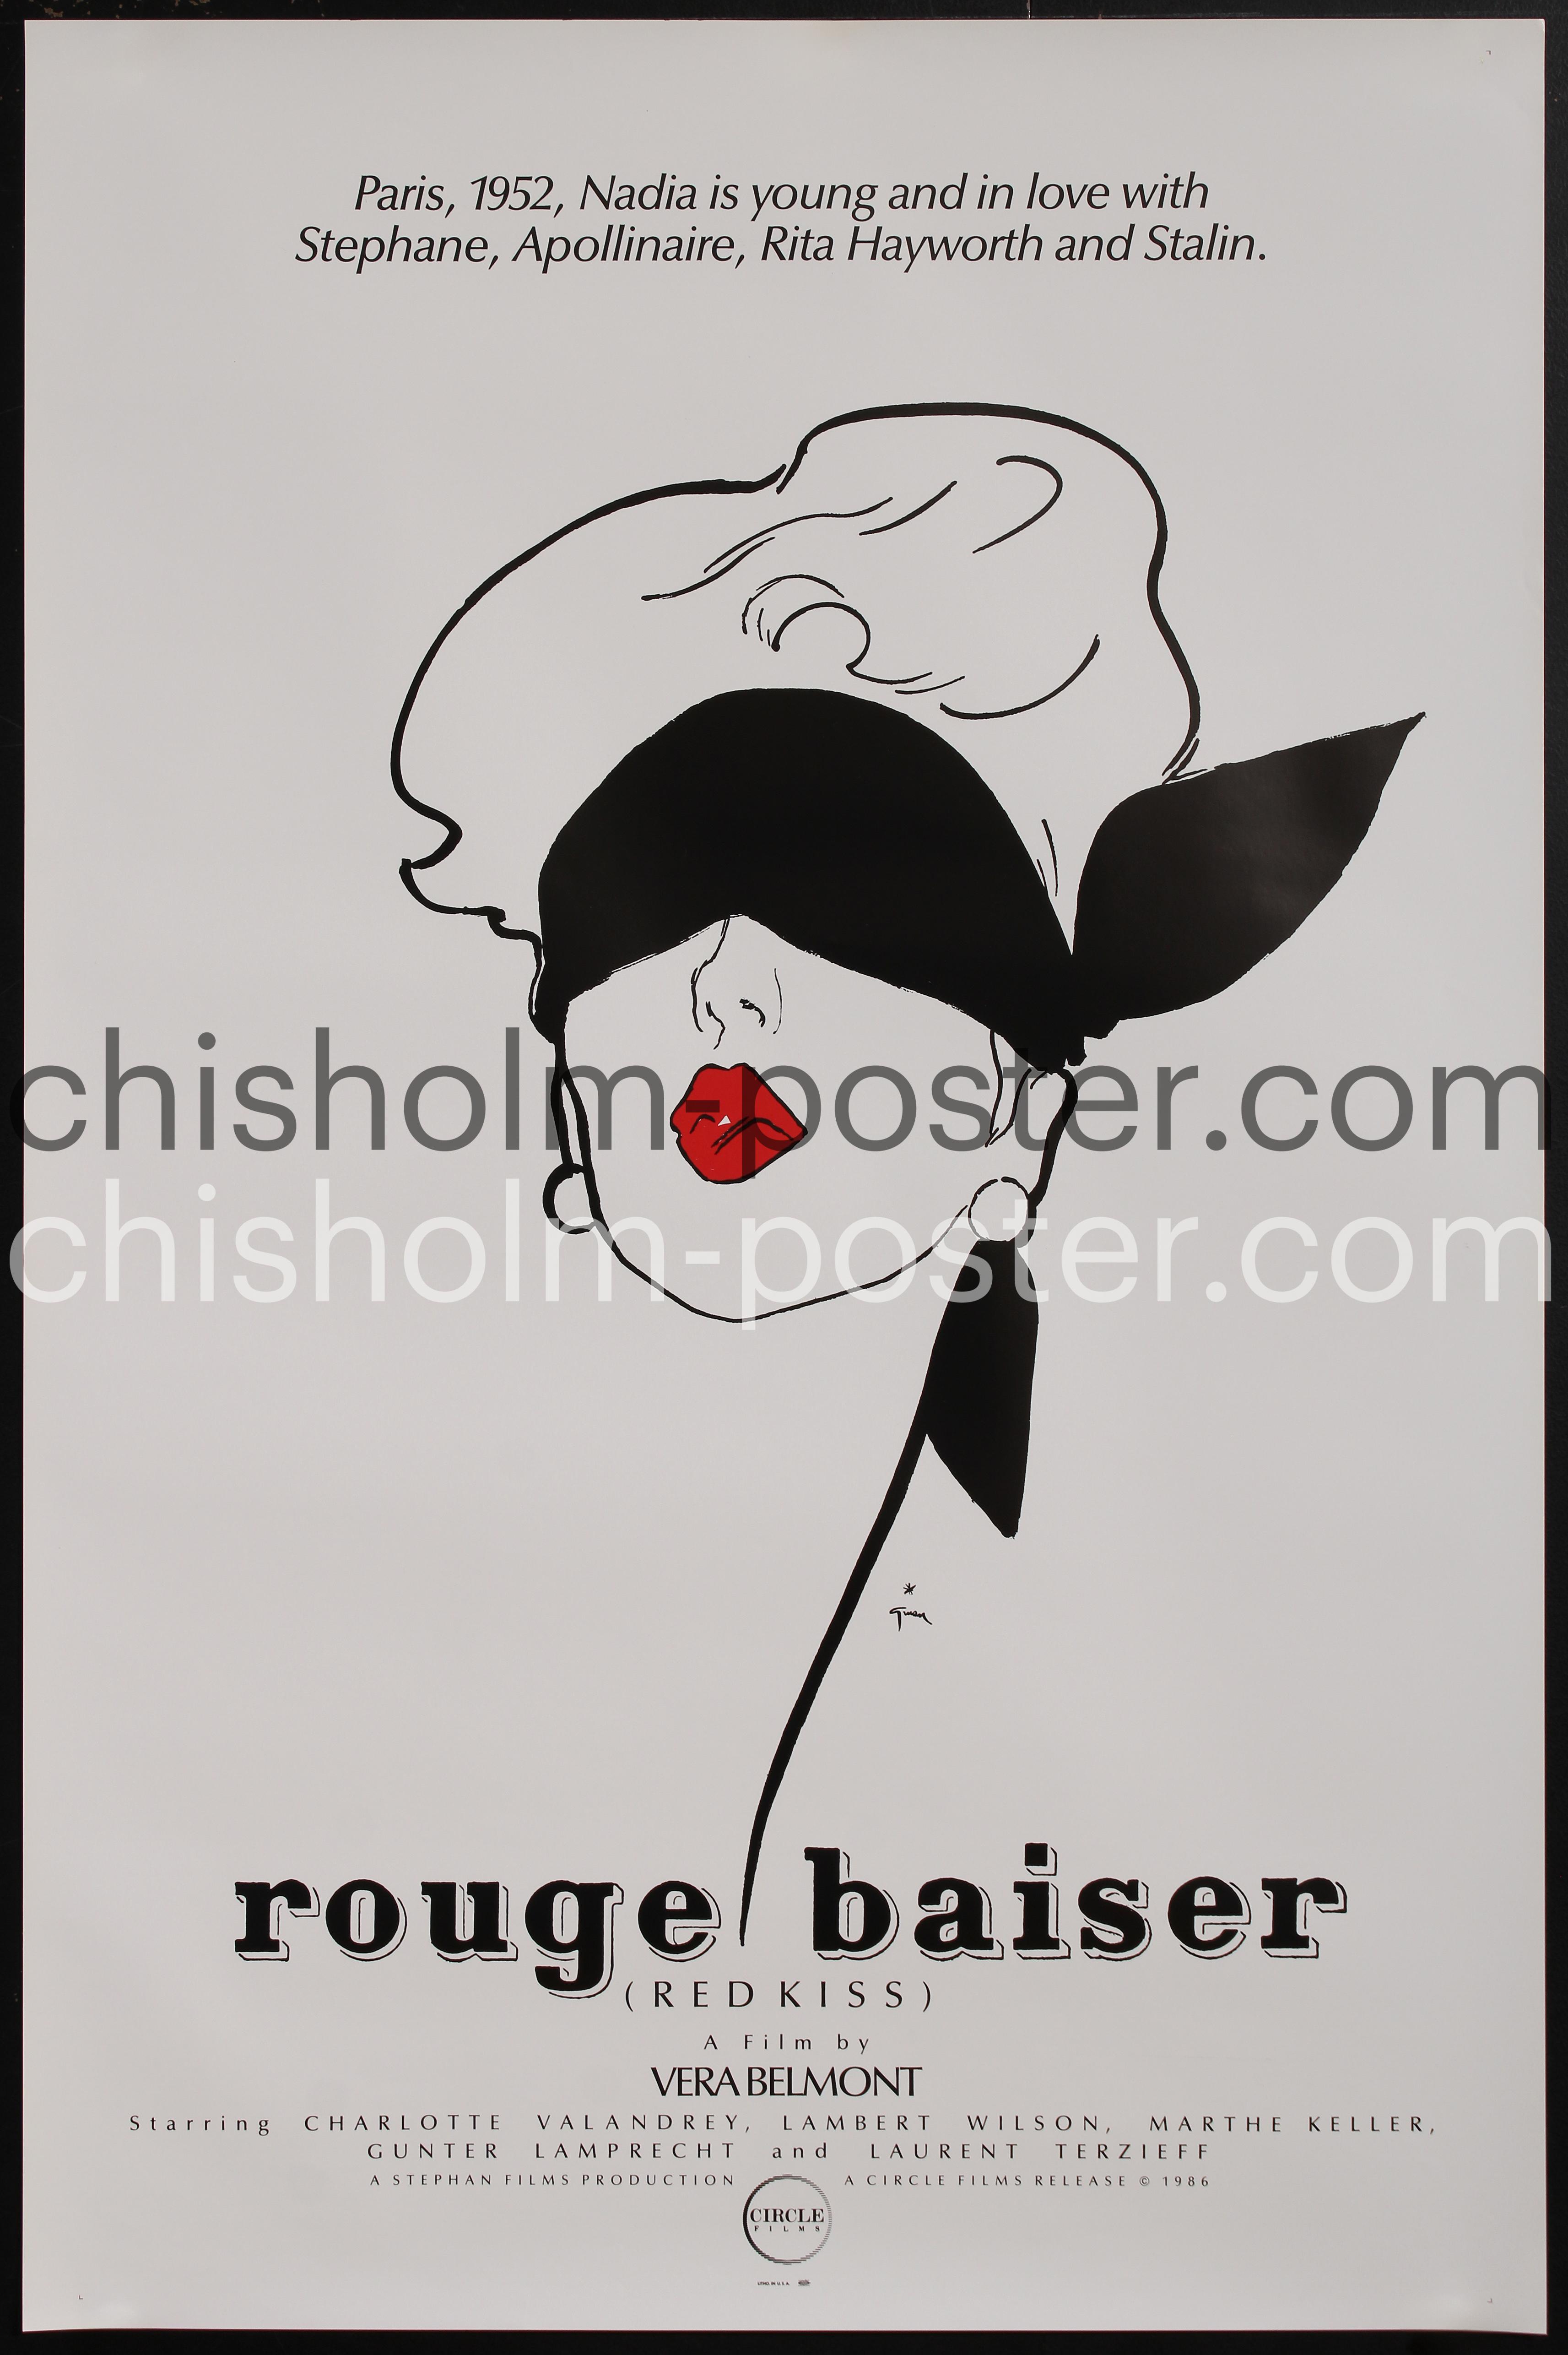 Le Rouge Baiser、Paris 1948/ルネ グリュオ/ポスター - 印刷物